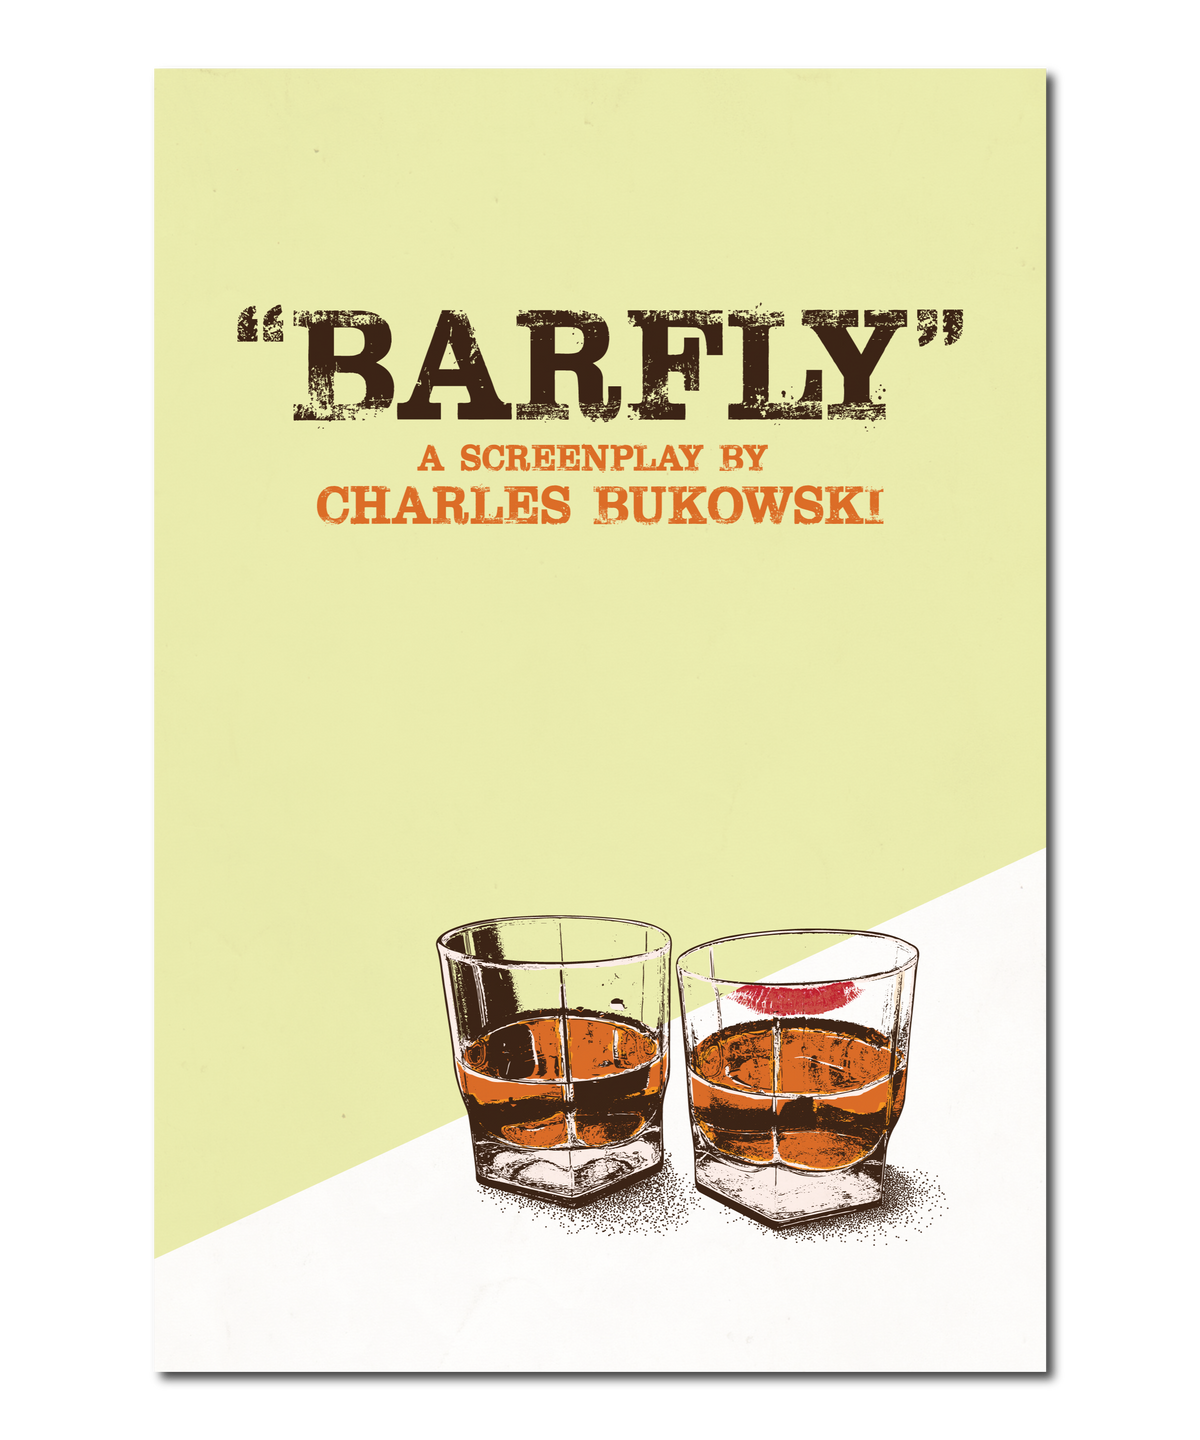 Original Print Reinterpretation of the Charles Bukowski Screenplay, "Bar Fly”